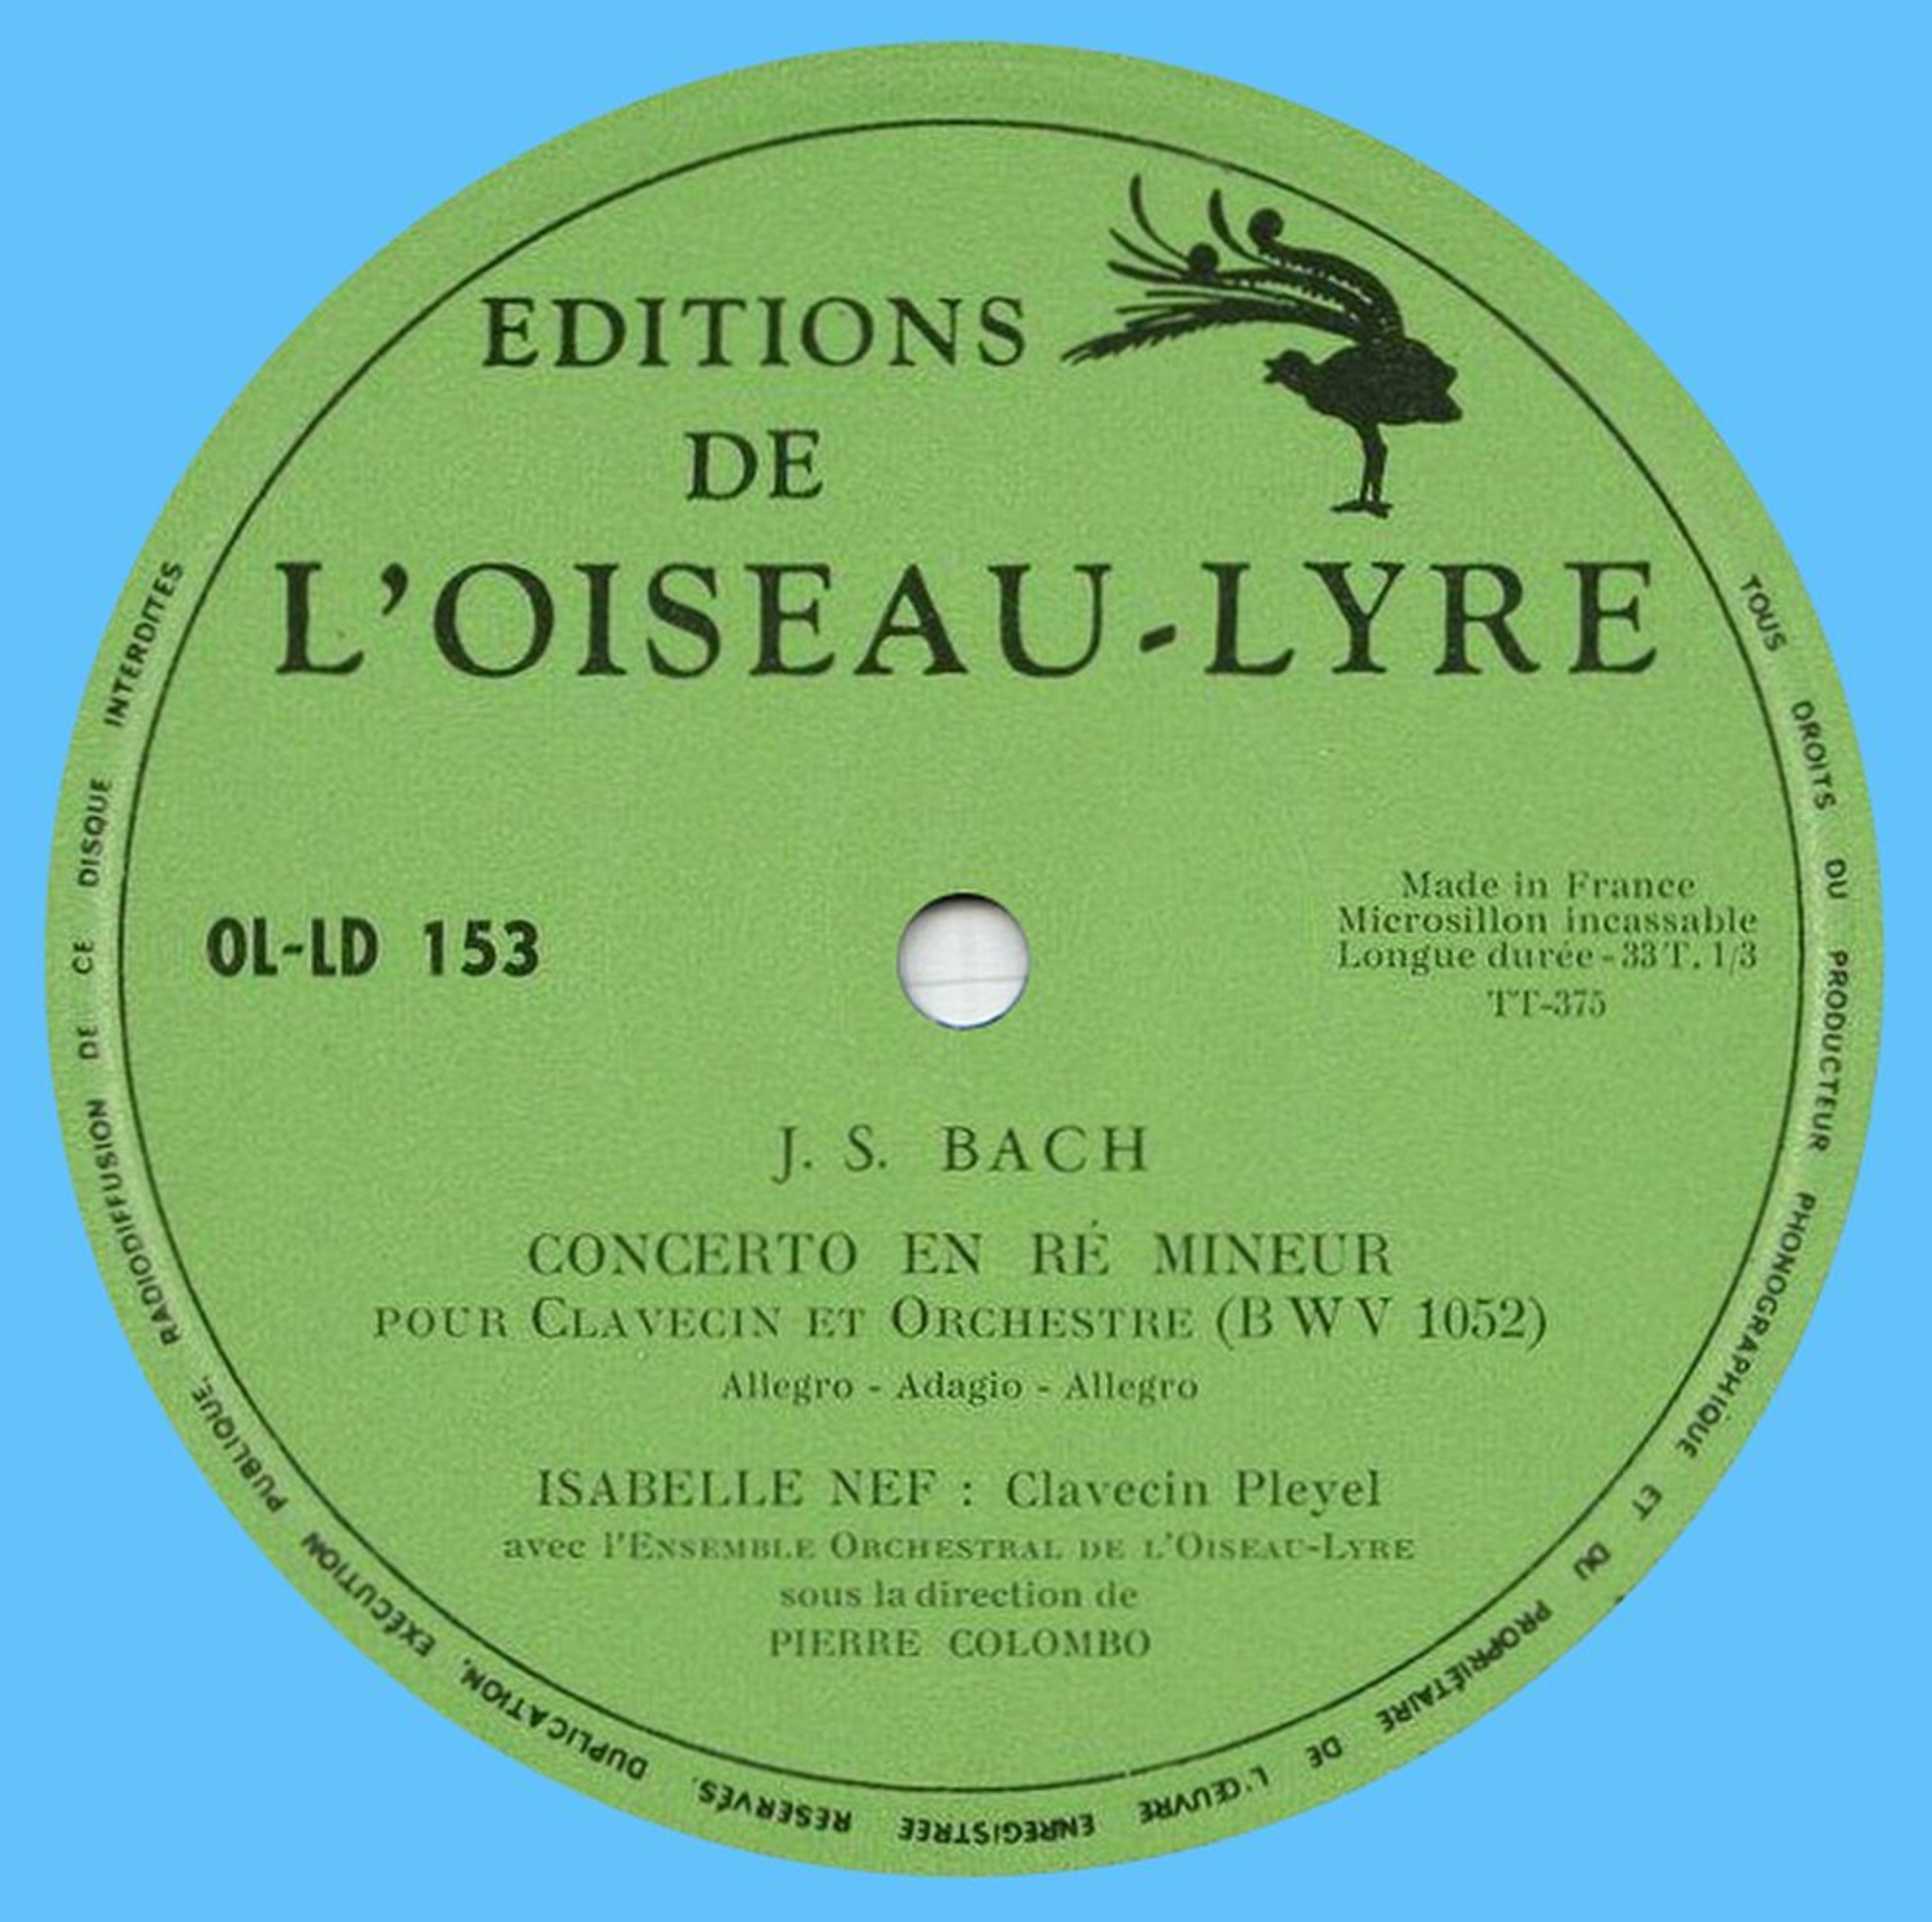 Bach BWV 1052 Bach CPE Wq 17 Nef EOOiseauLyre Colombo Label 1 64C2FB